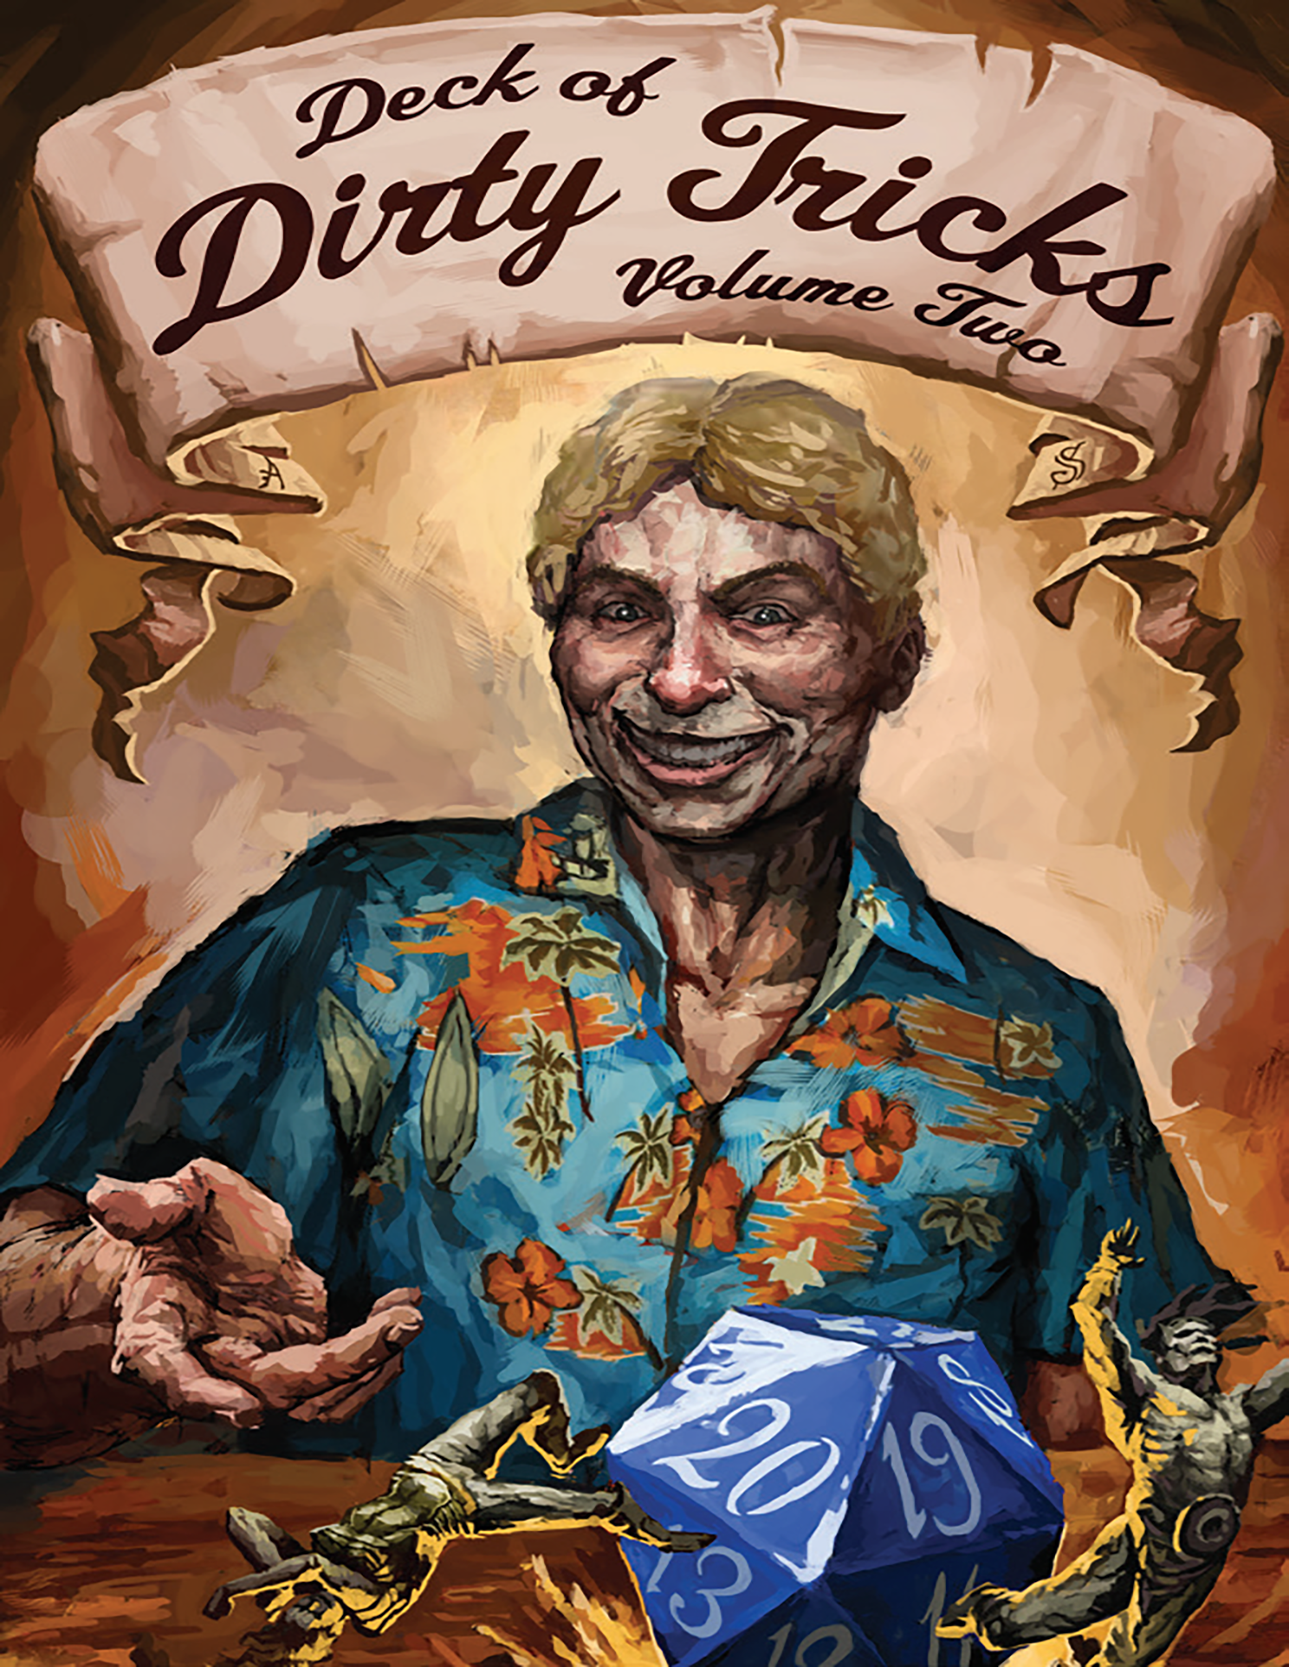 Deck of Dirty Tricks Vol 2.